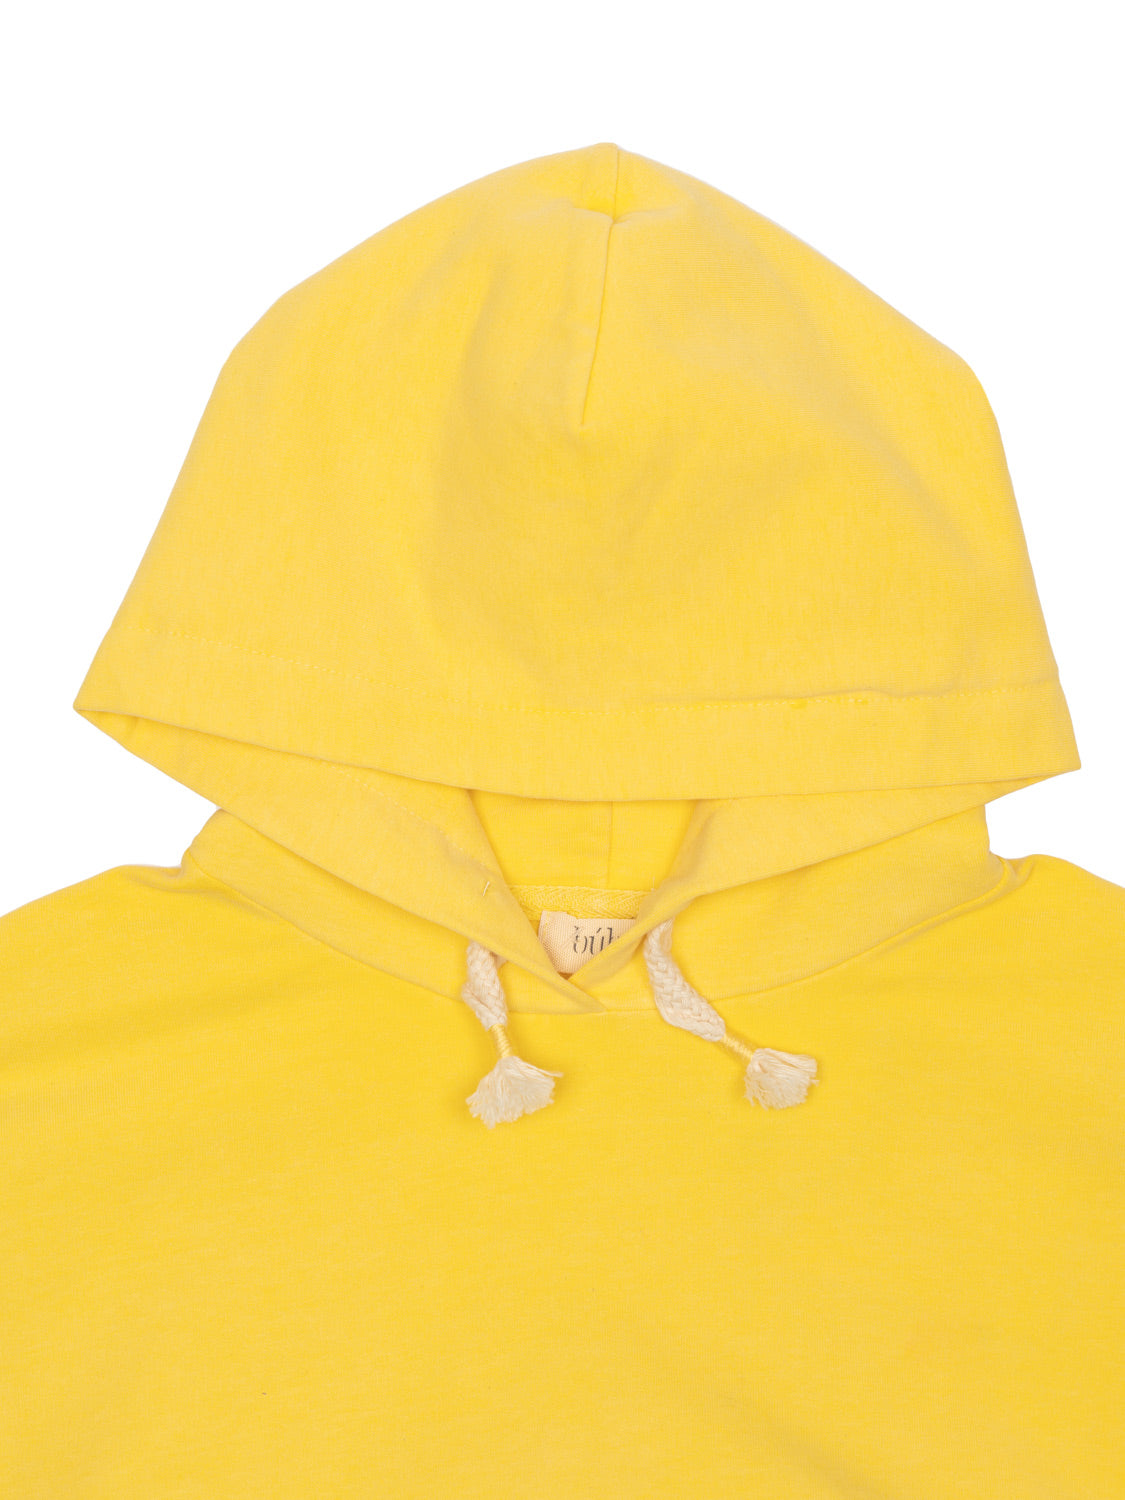 Girly Hood Sweatshirt - Gelb